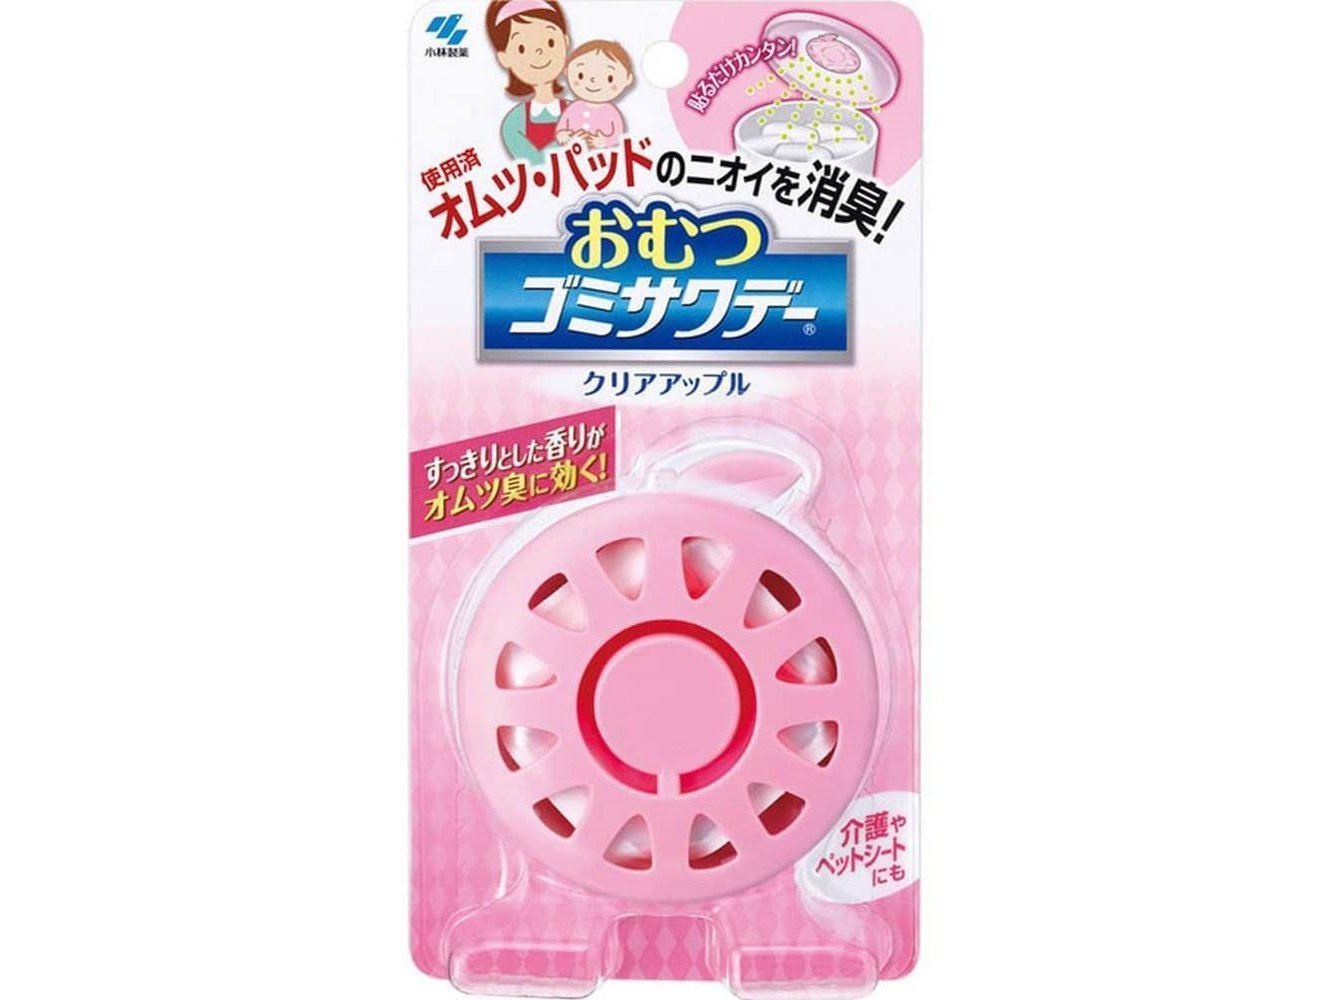 Kobayashi Diaper Trash Deodorant